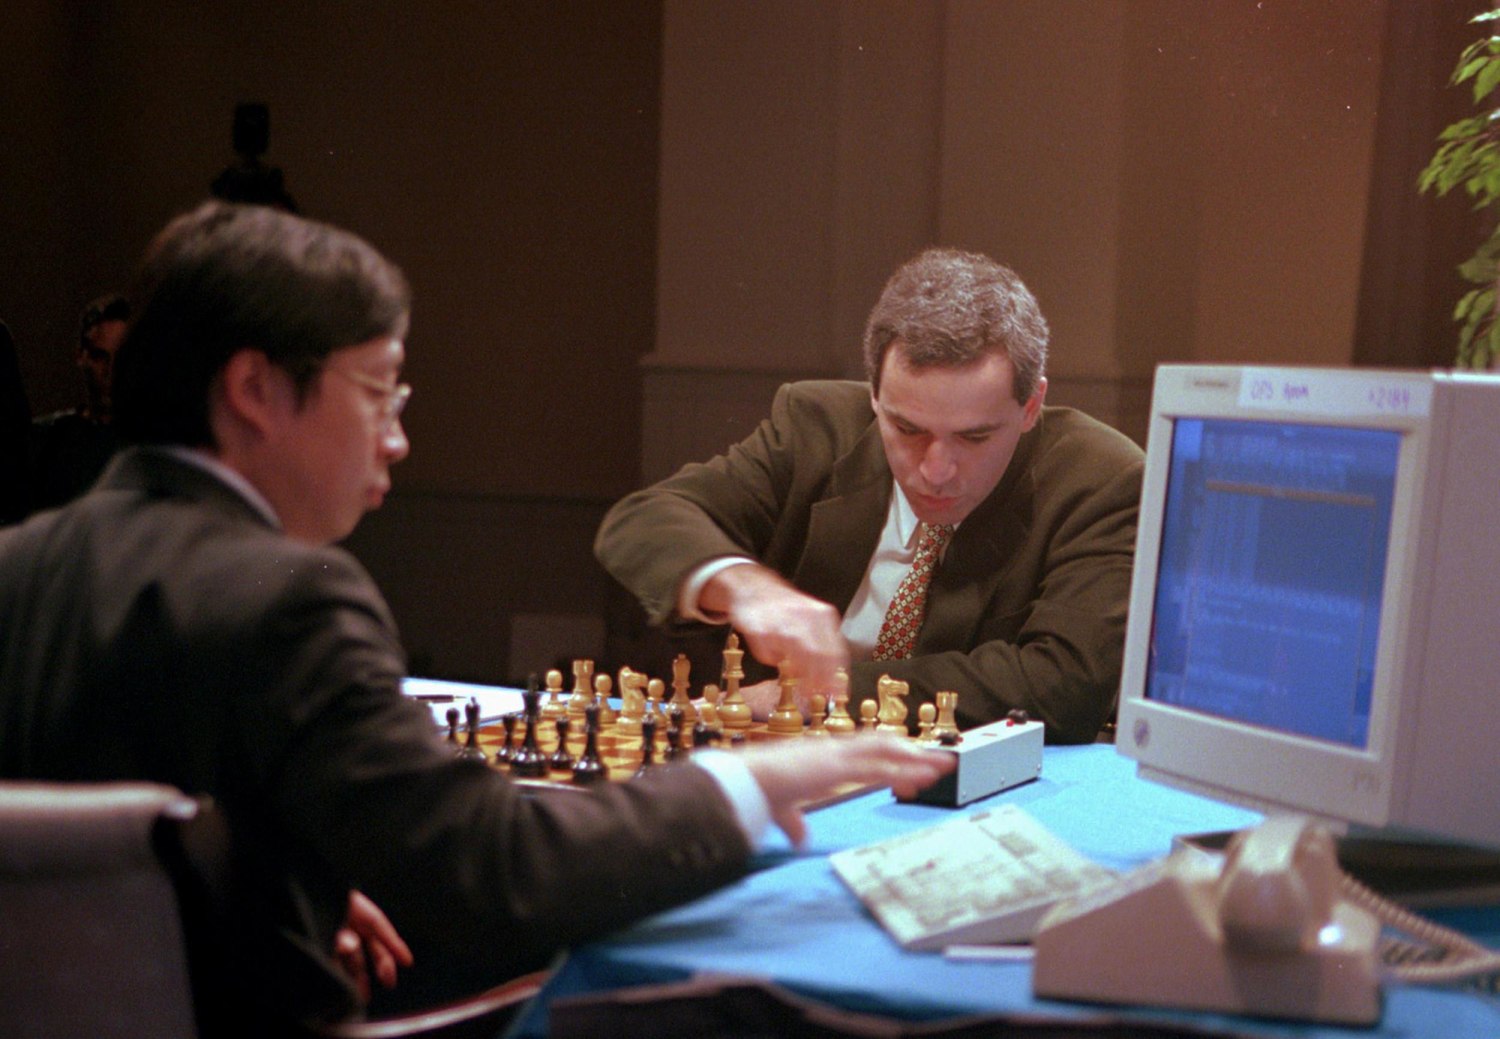 Deep Blue beat G. Kasparov in 1997 